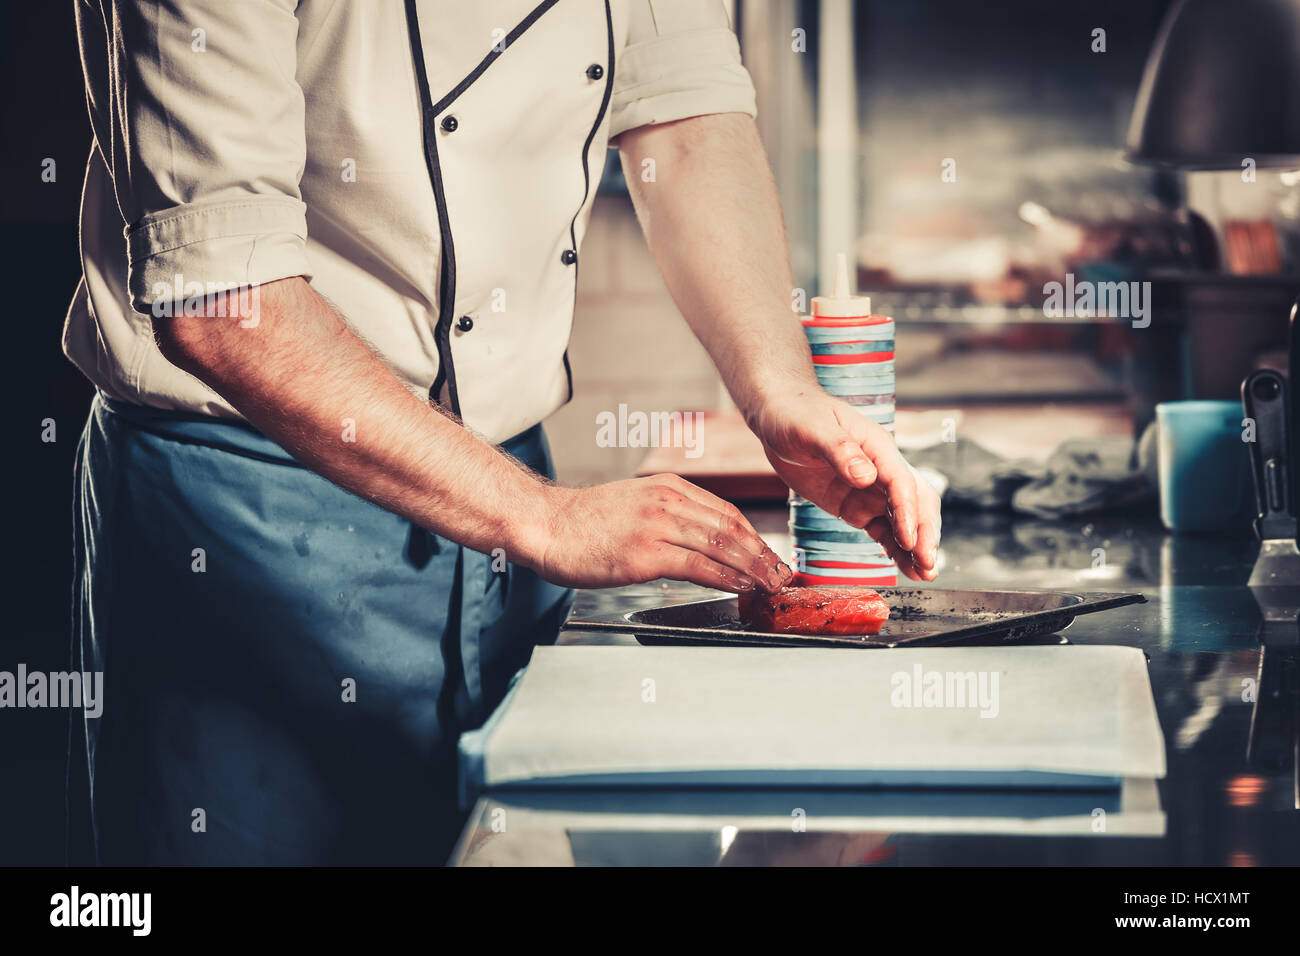 Chef prepares dish in the kitchen Stock Photo